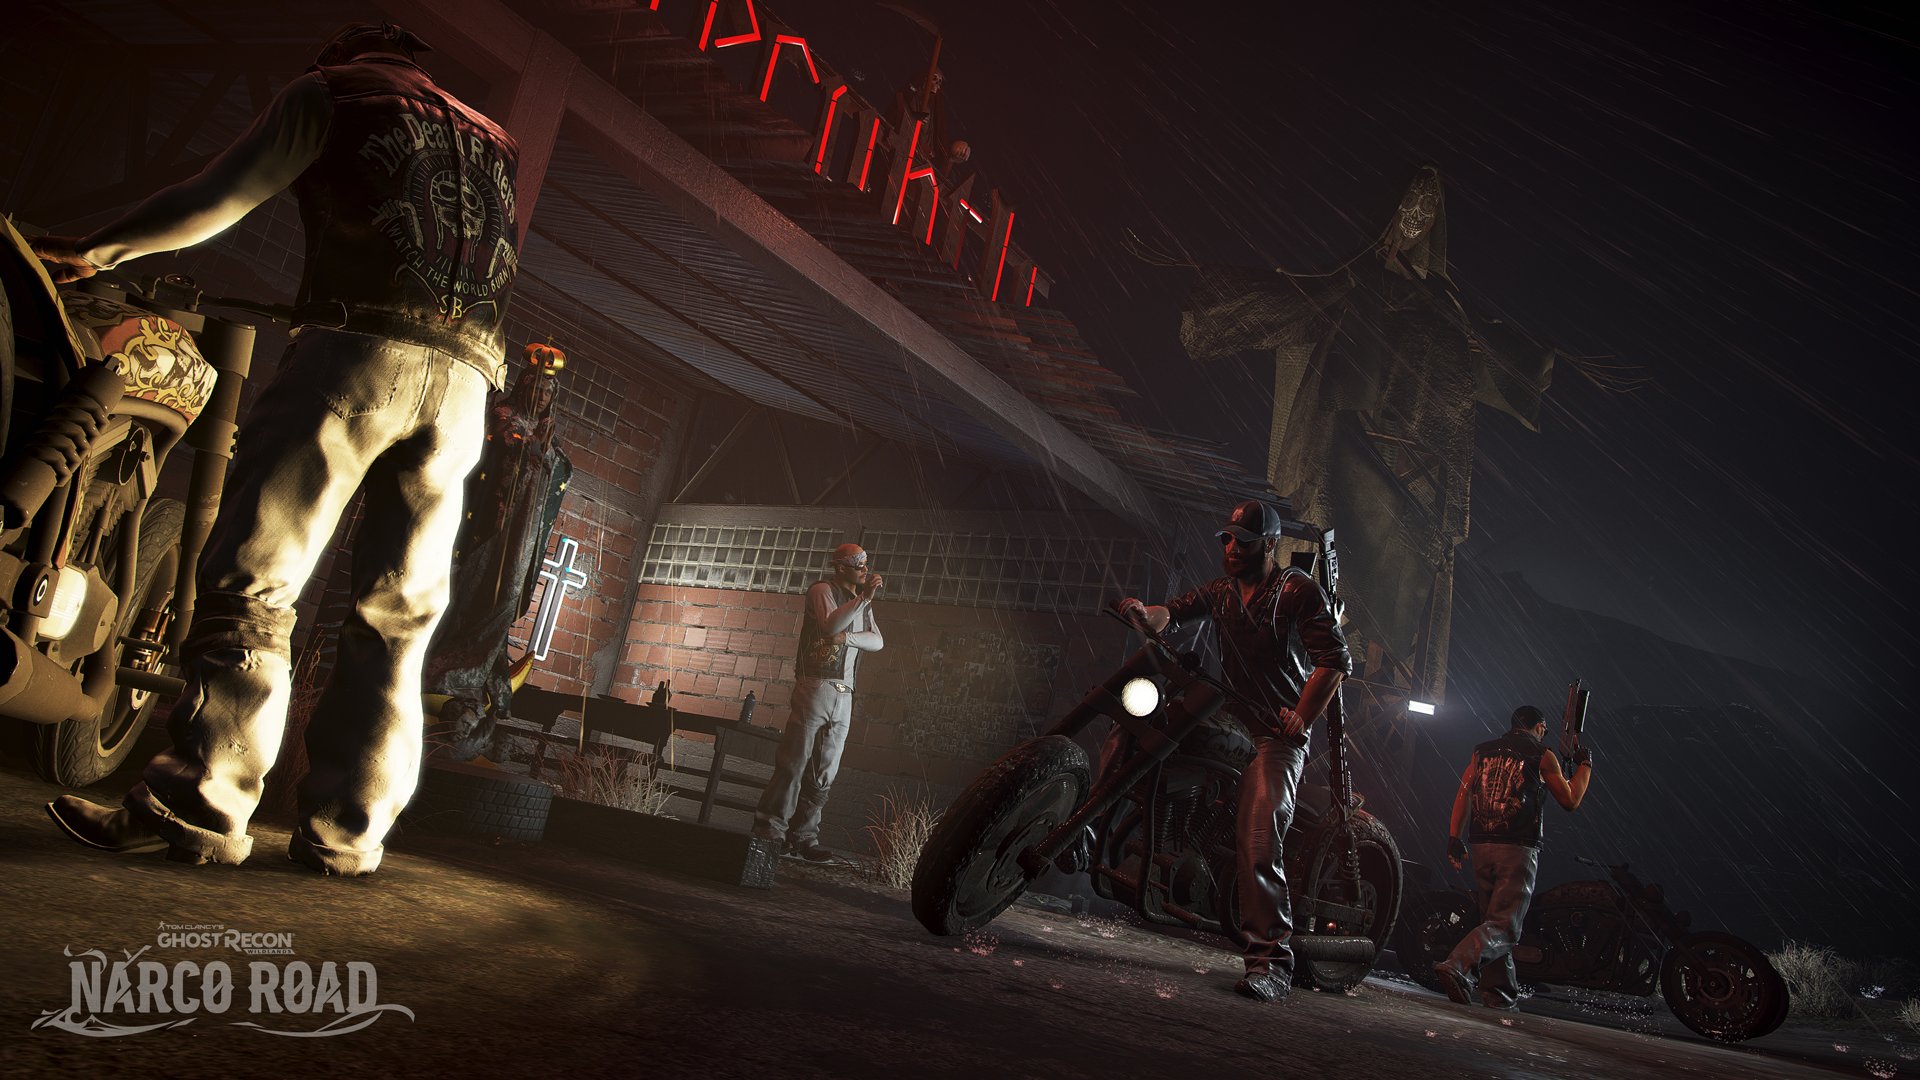 Ghost Recon Narco Road Screenshot